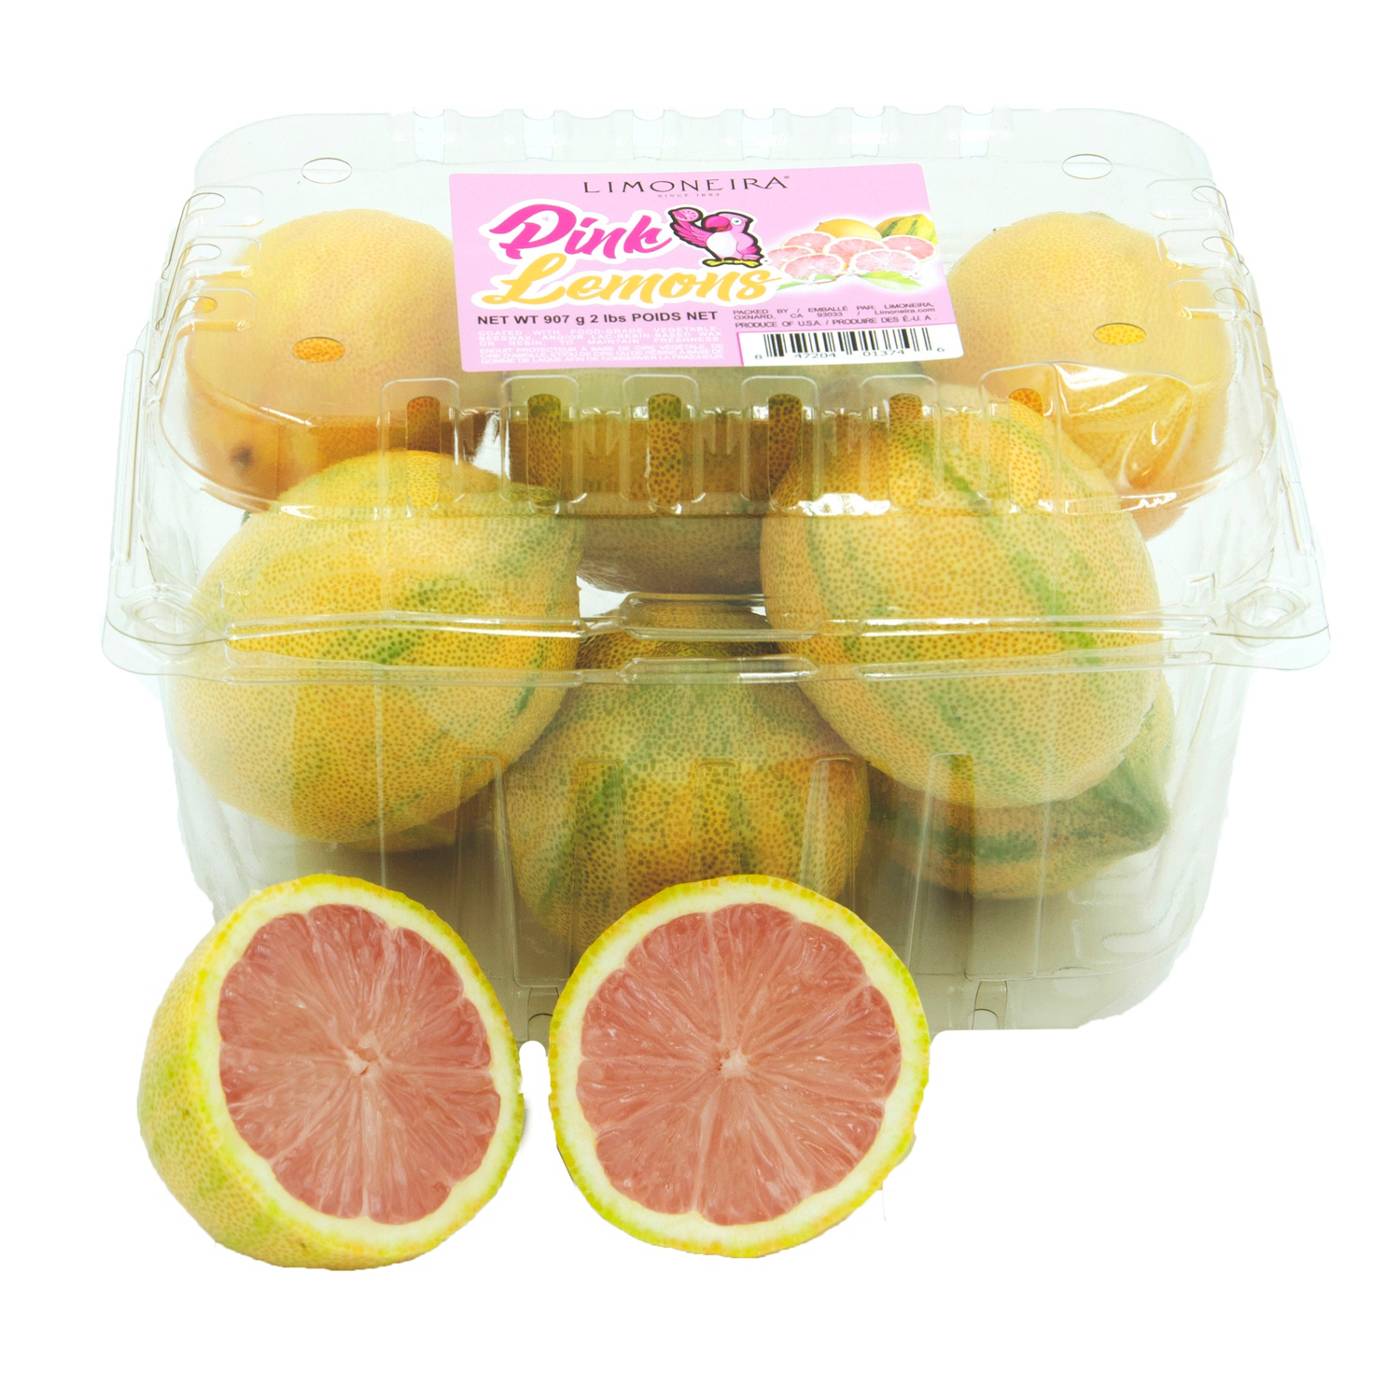 Limoneira Pink Lemons; image 1 of 3